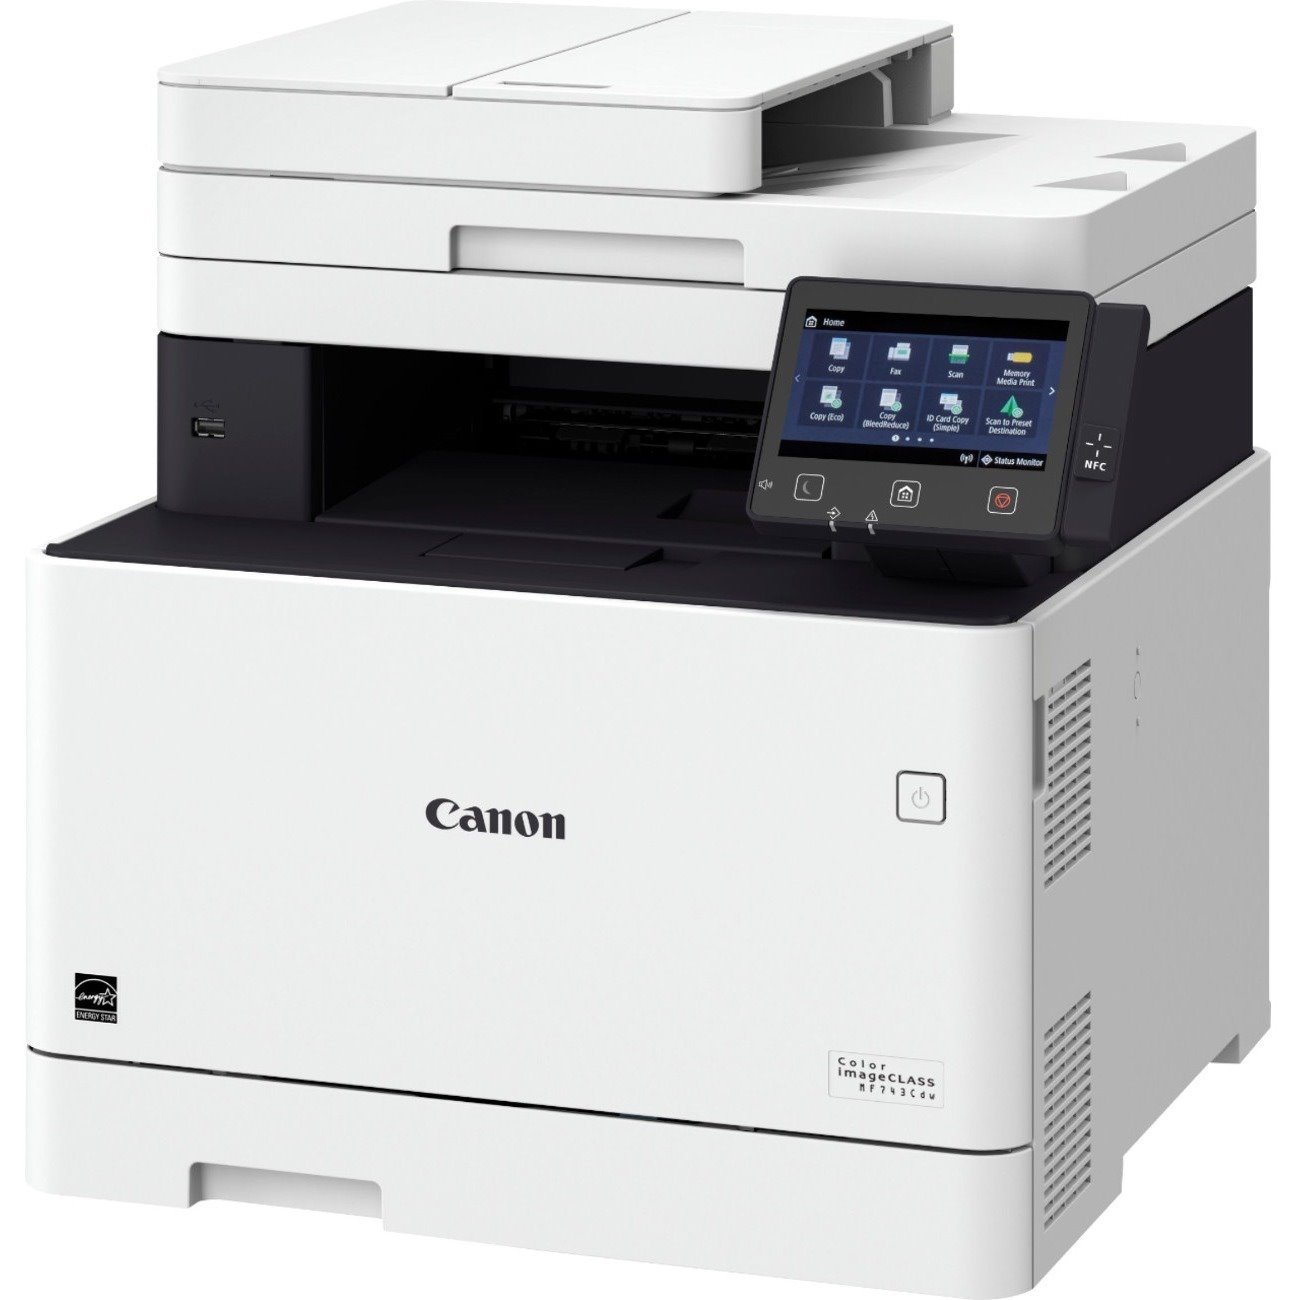 Canon imageCLASS MF740 MF743Cdw Laser Multifunction Printer-Color-Copier/Fax/Scanner-ppm Mono/28 ppm Color Print-600x600 dpi Print-Automatic Duplex Print-300 sheets Input-600 dpi Optical Scan-Color Fax-Wireless LAN-Near Field Communication (NFC)